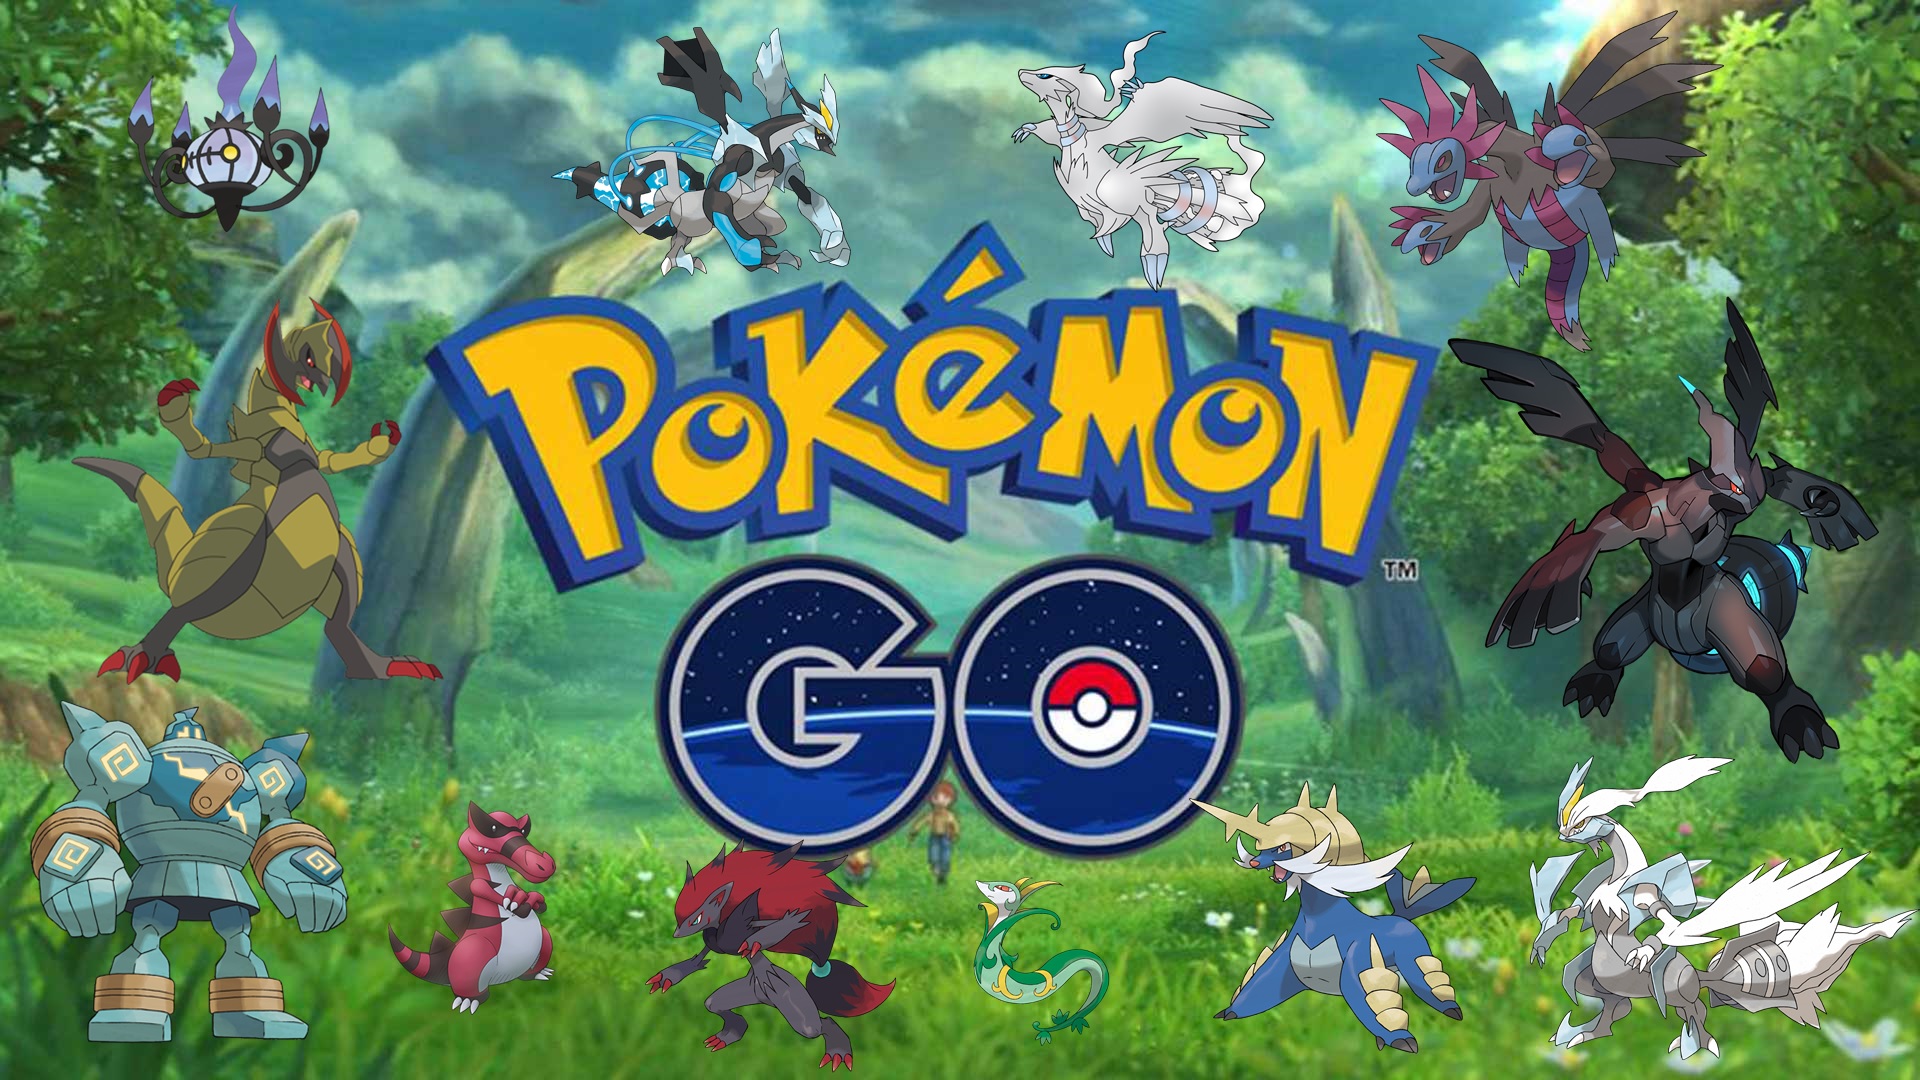 💯✨🕵👀 ENGEL GO 🚨📱 💯✨ on X: 🎉📢 Unreleased Pokémon coming soon to  Pokémon GO? 🎉📢👀 #PokemonGO @AbhiQeep @nui103kp_kp @Tyranitar_Rocks  @TakashiProcito1 @nyankosensei252 @LunaJaimes4  / X